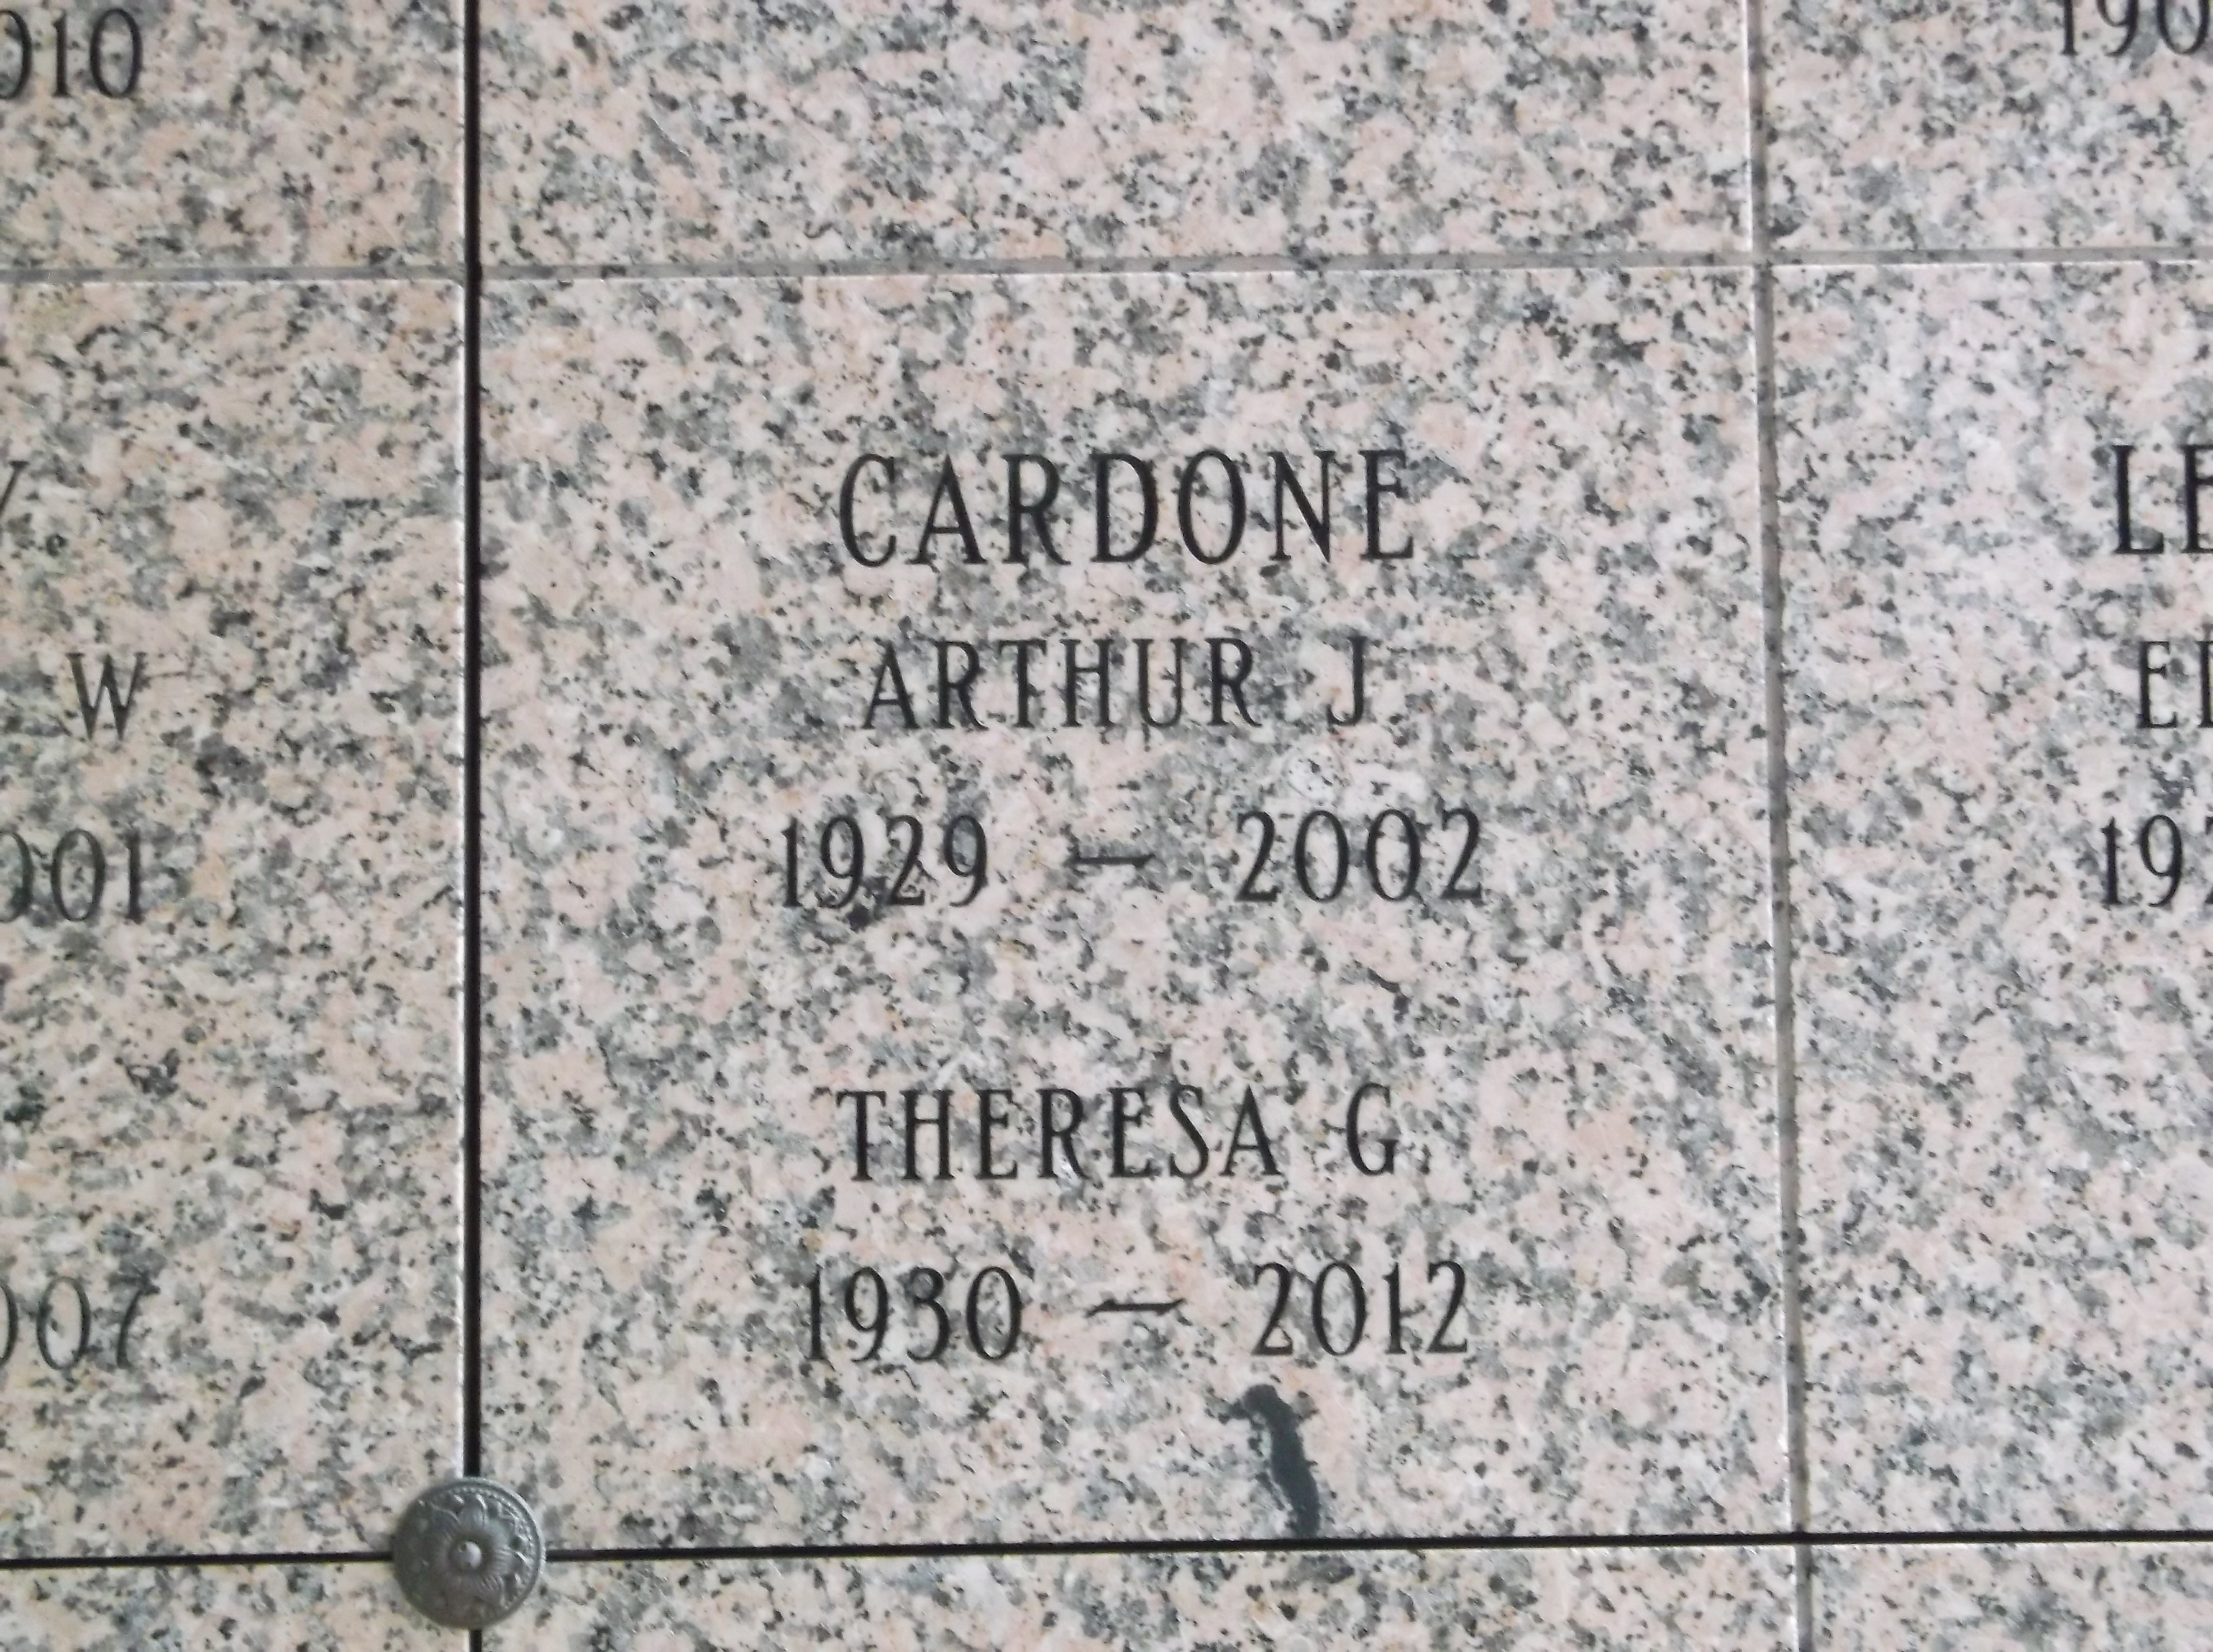 Arthur J Cardone